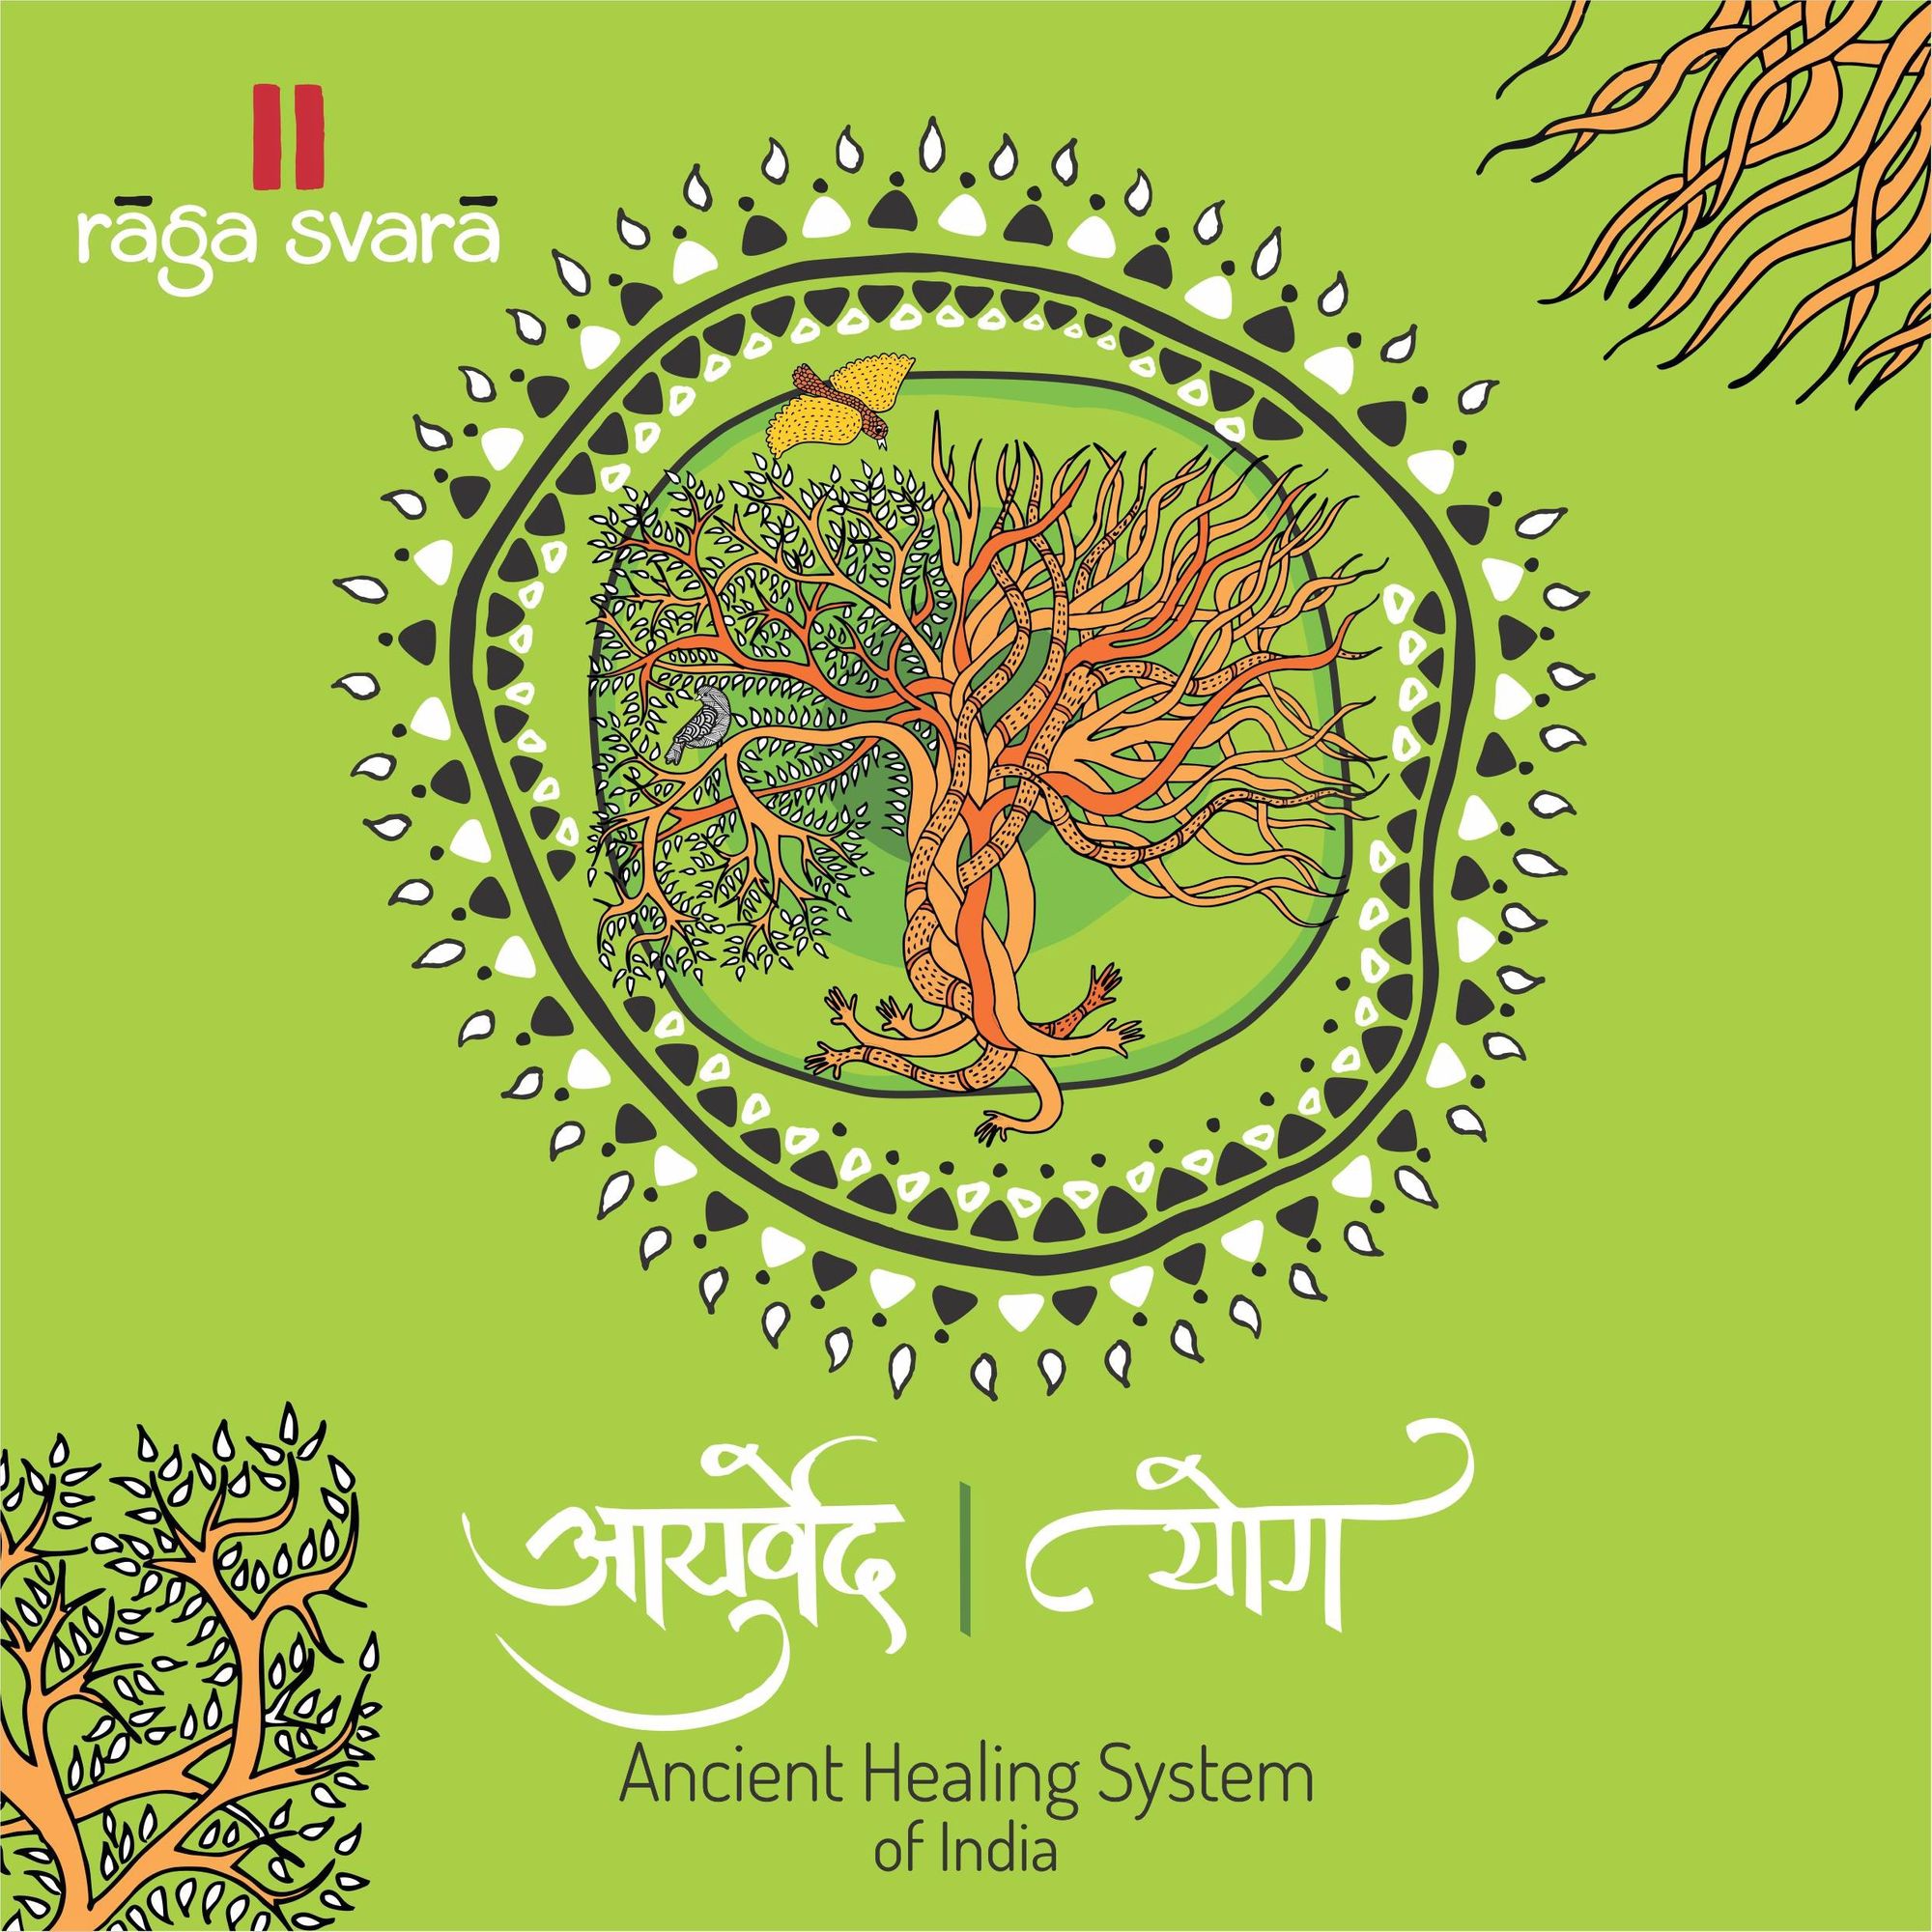 Ancient Healing System — Ayurveda